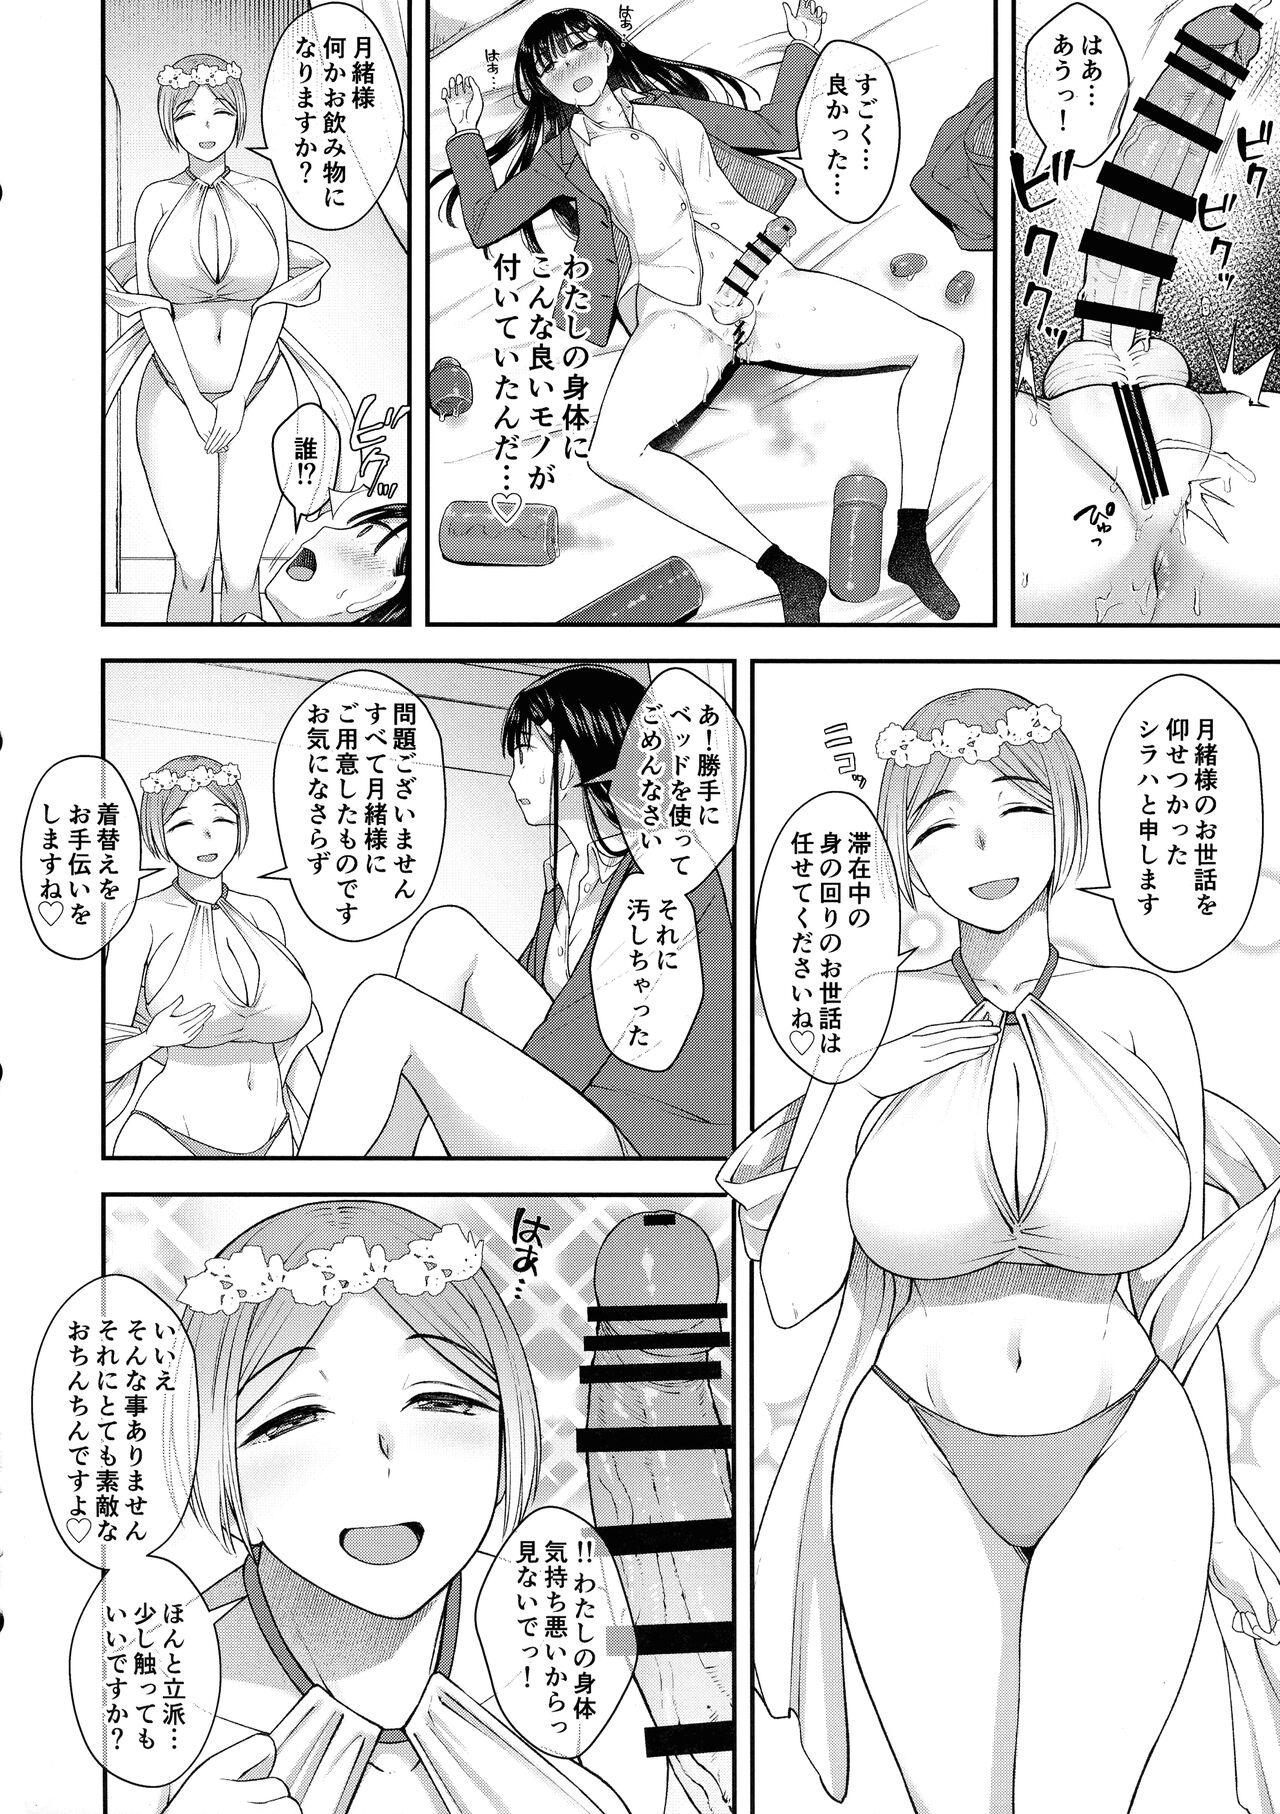 Alternative Watashi wa o chinchin no kamisama ni deatta. Anal - Page 7